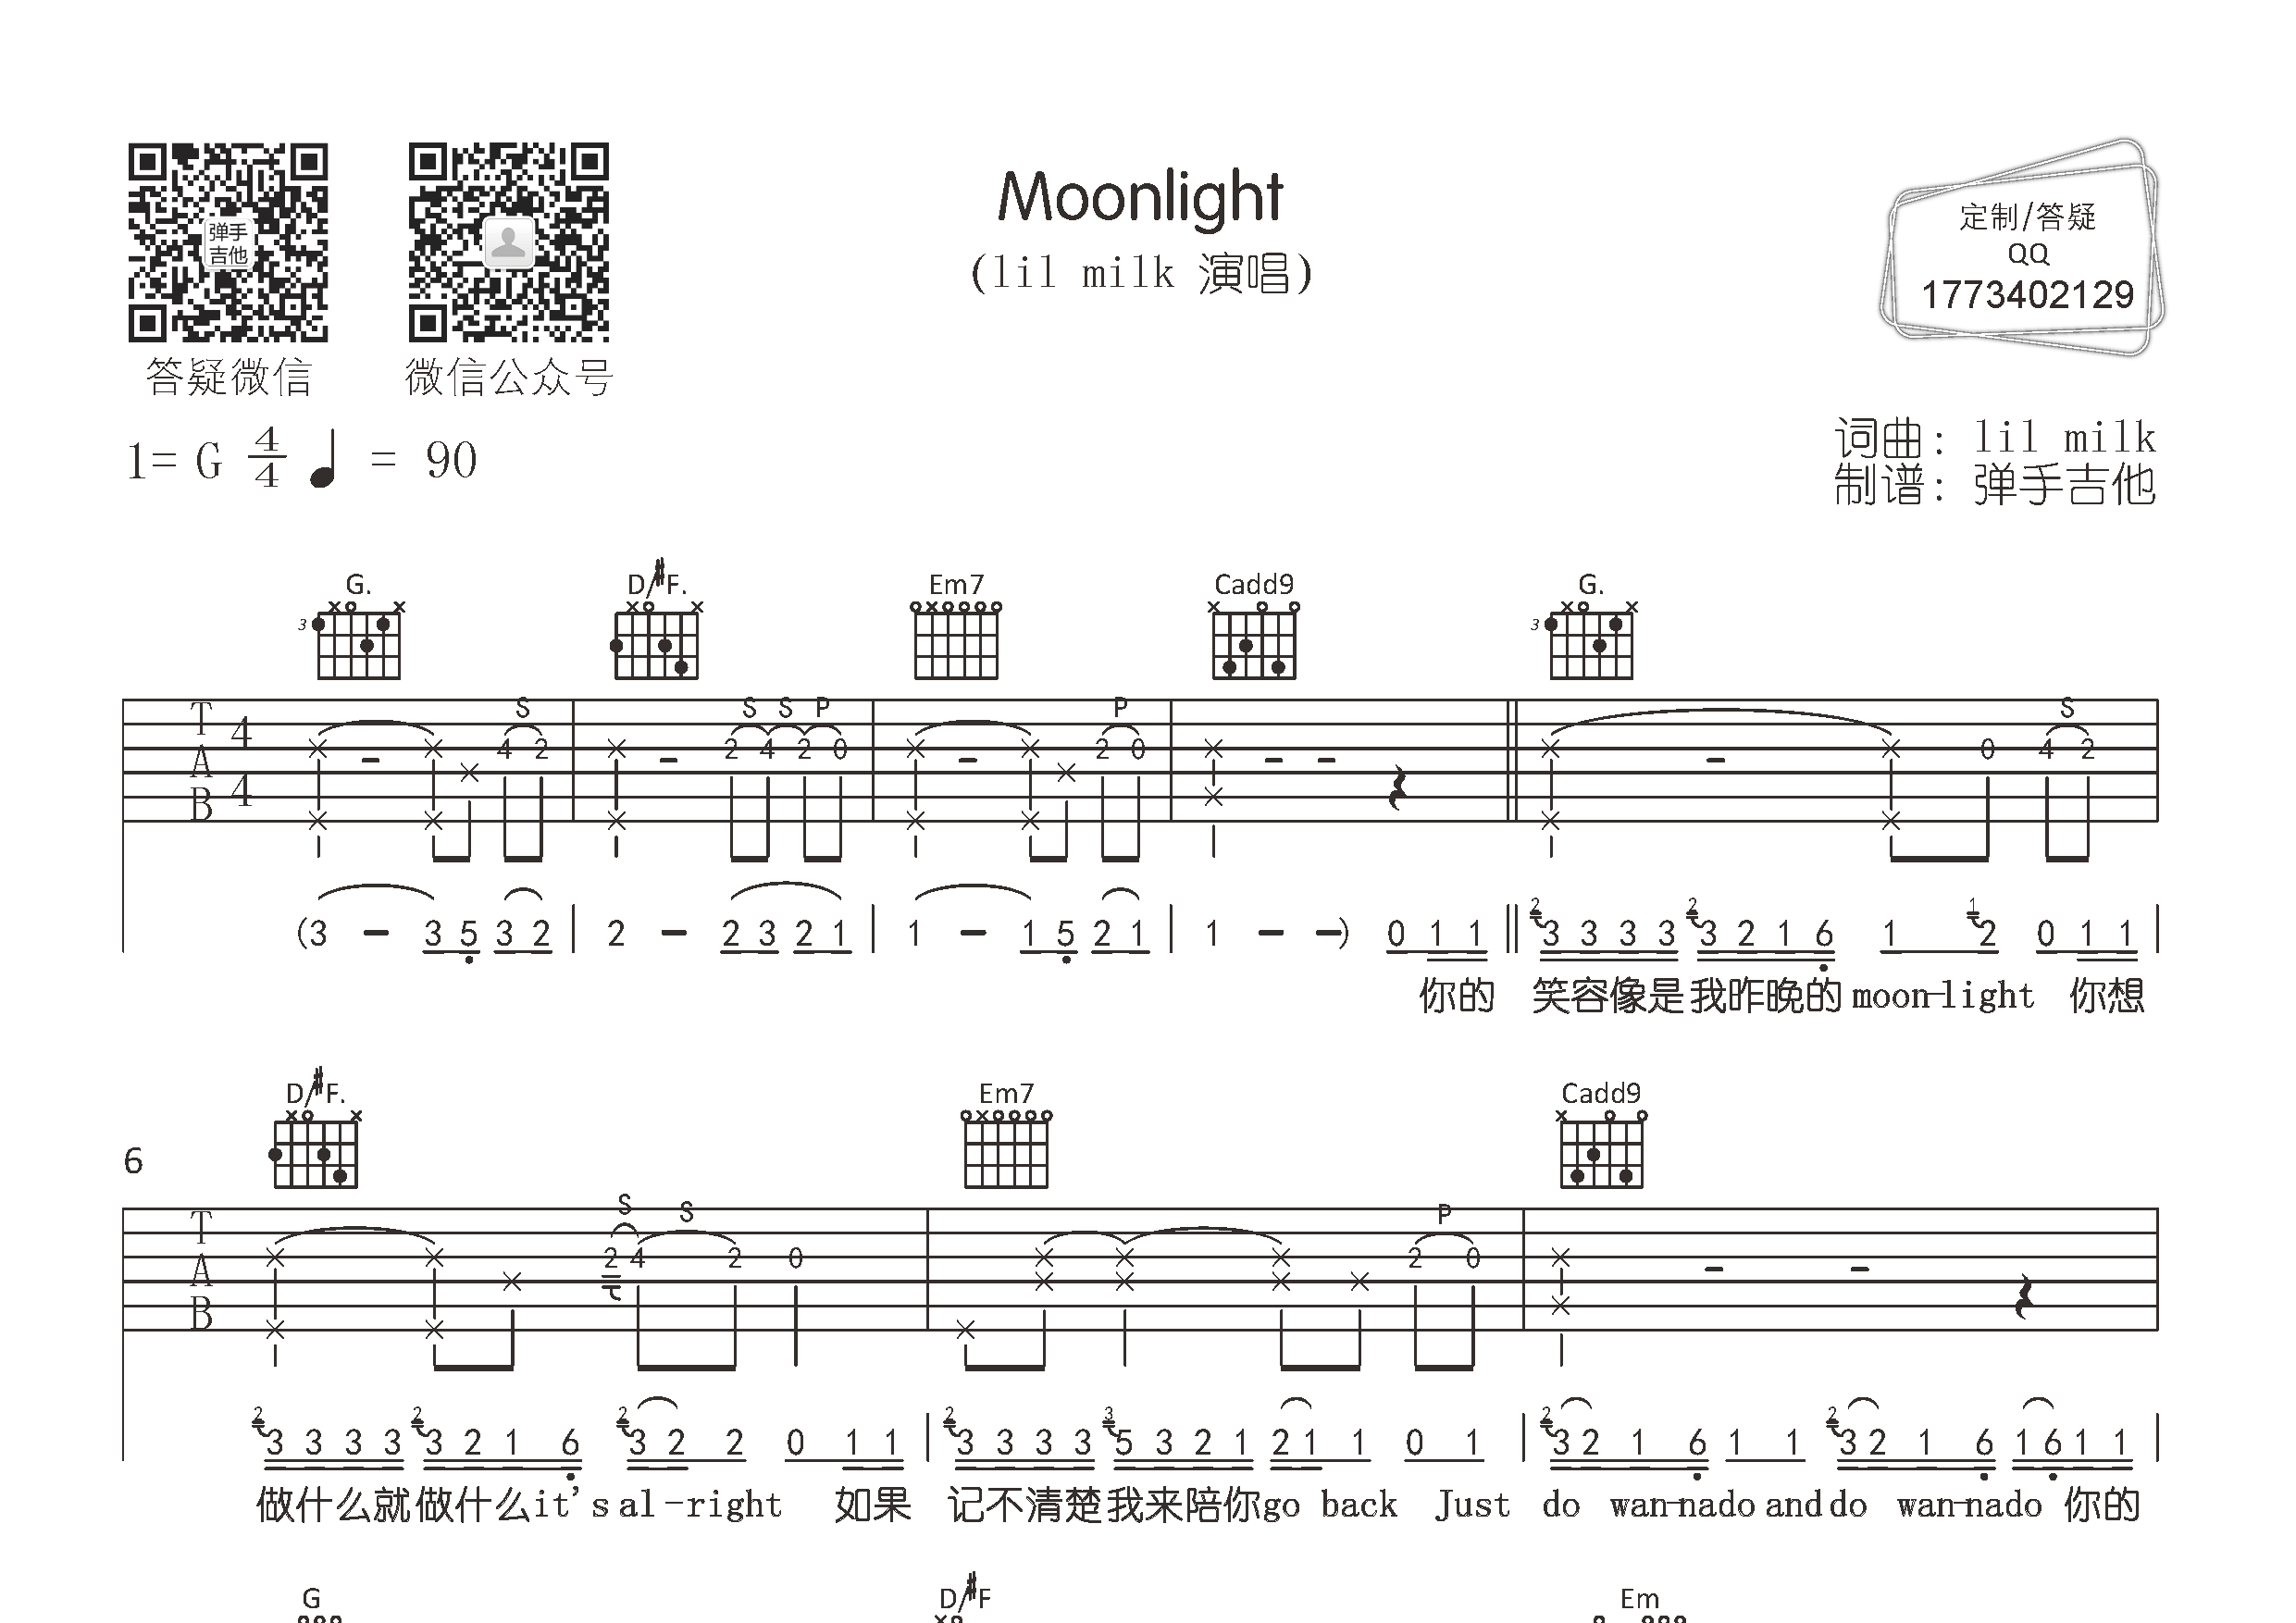 moonlight(弹手吉他编配)